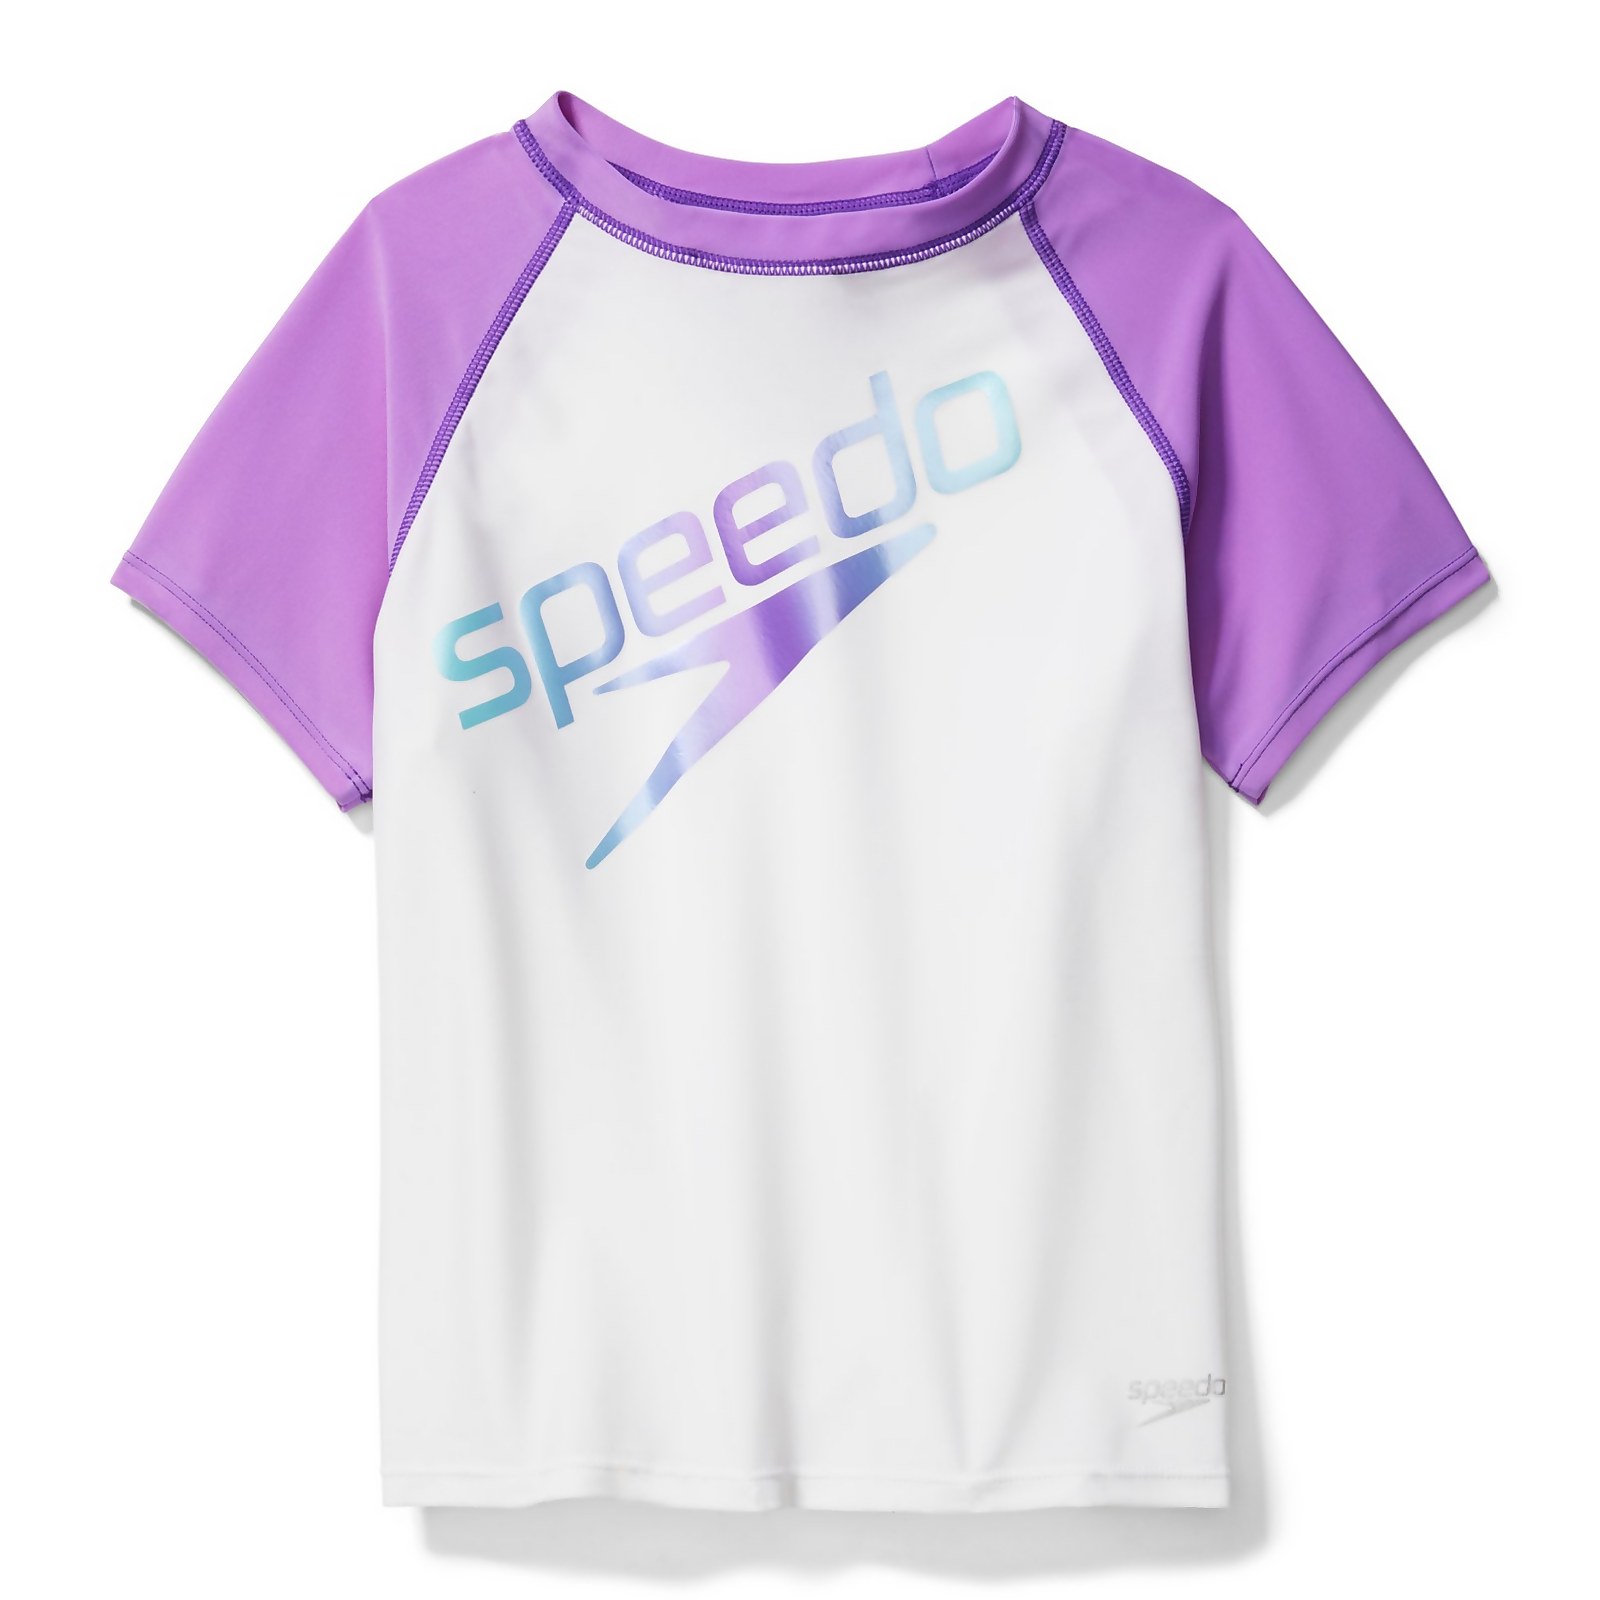 Speedo  Short Sleeve Logo Rashguard - S    : Purple